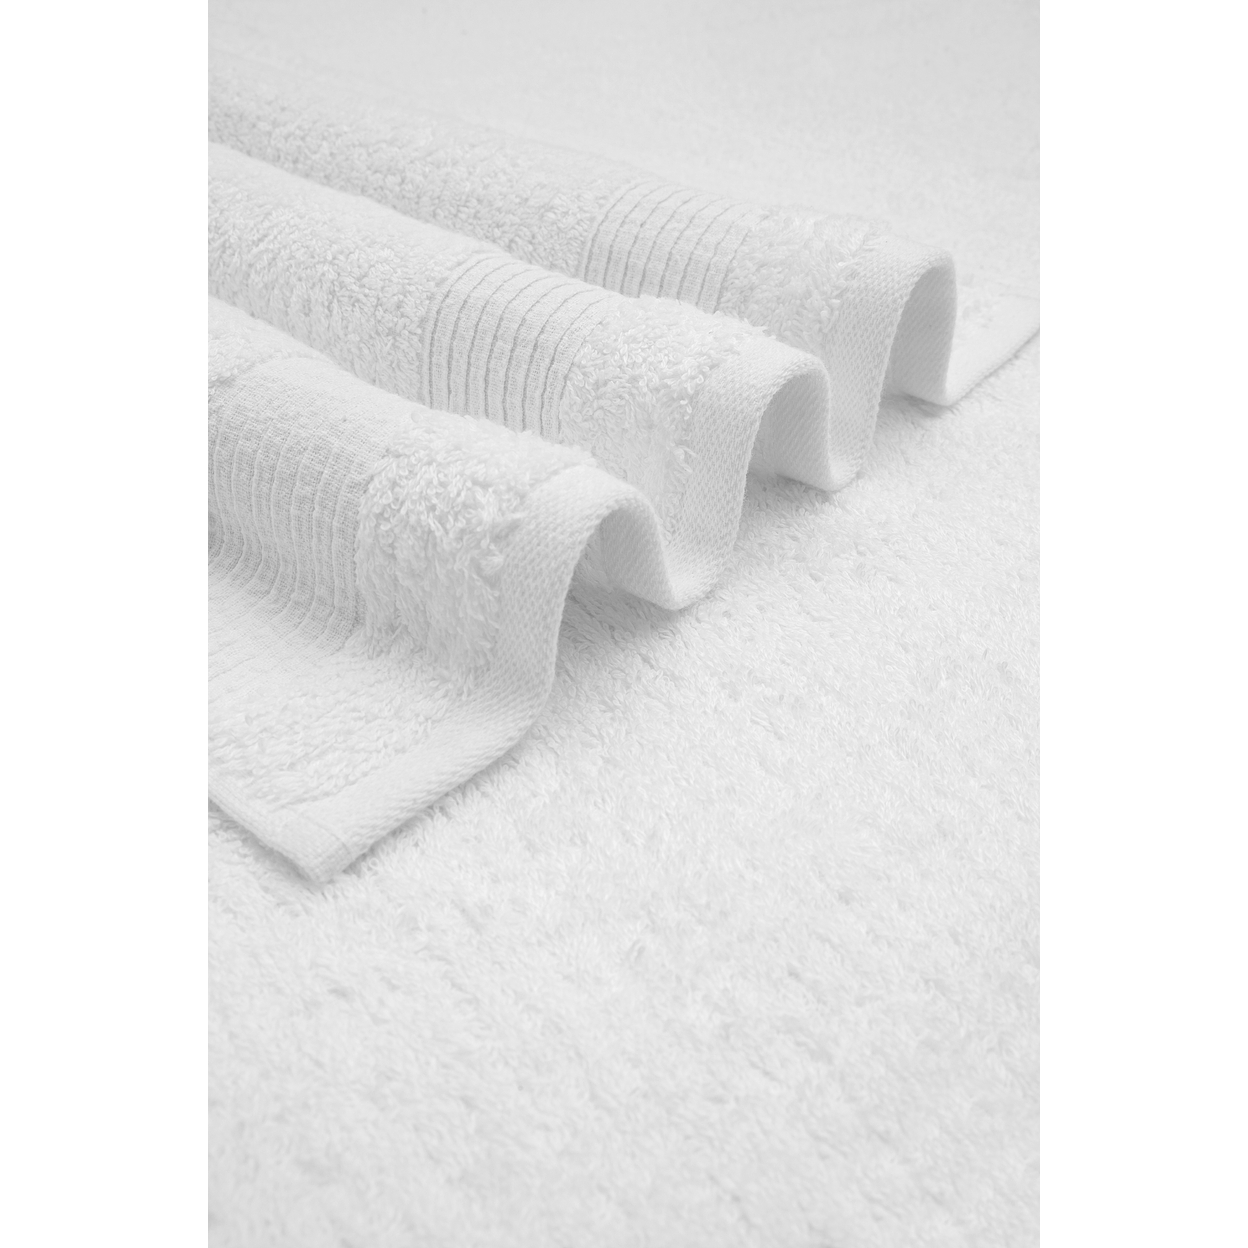 Chic Home Premium 6-Piece 100% Pure Turkish Cotton Towel Set, Jacquard Weave Design, OEKO-TEX Standard 100 Certified - White